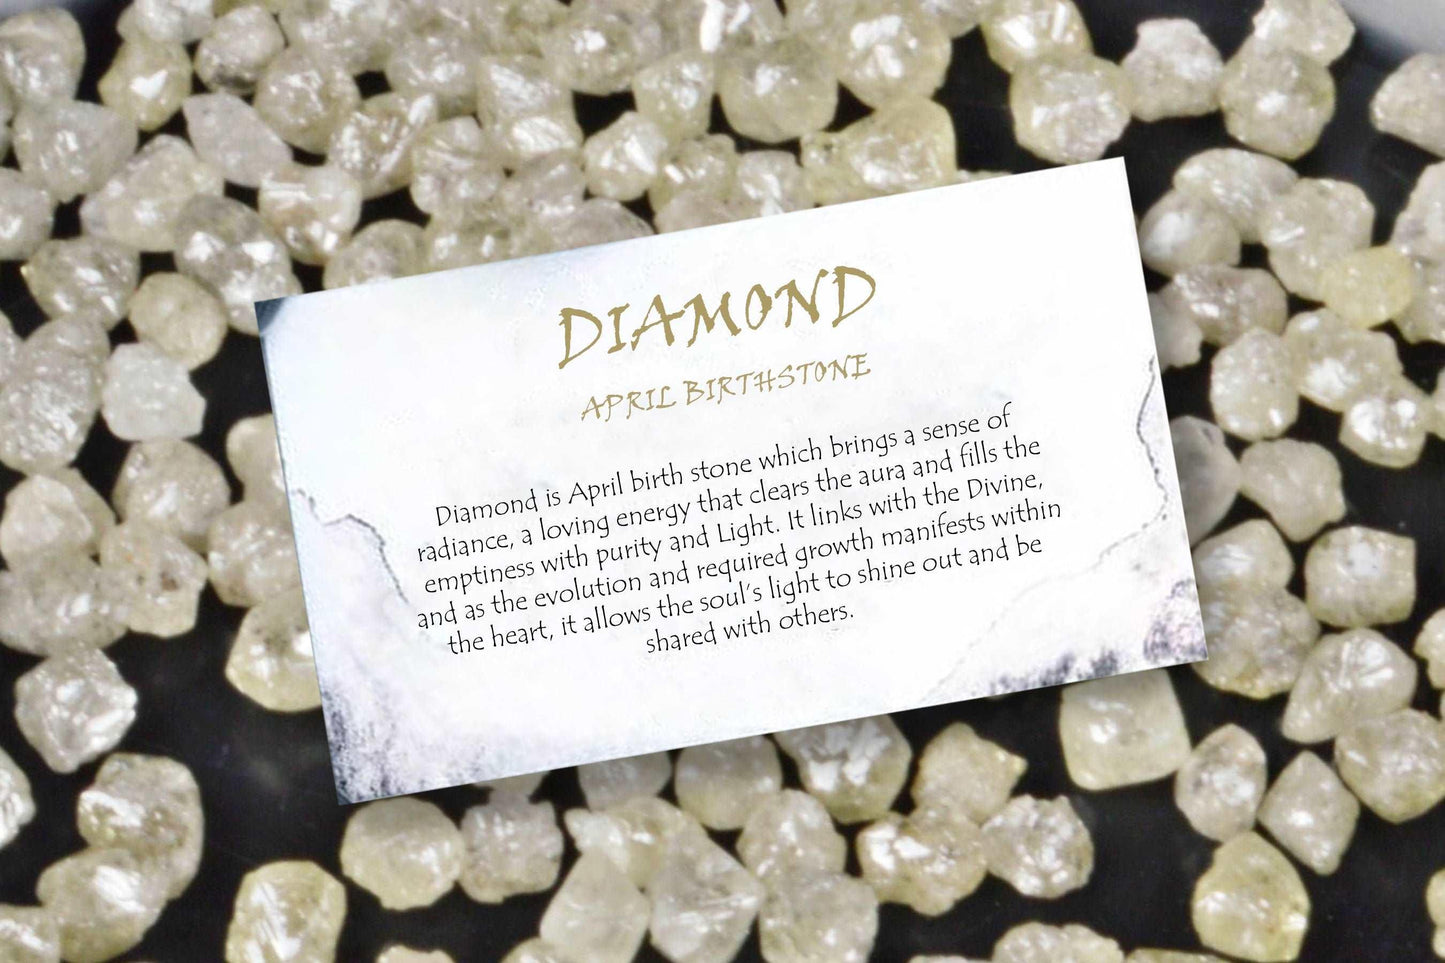 0.52 Carat SI/GH Quality White Diamond Anniversary Eternity Band - Chordia Jewels